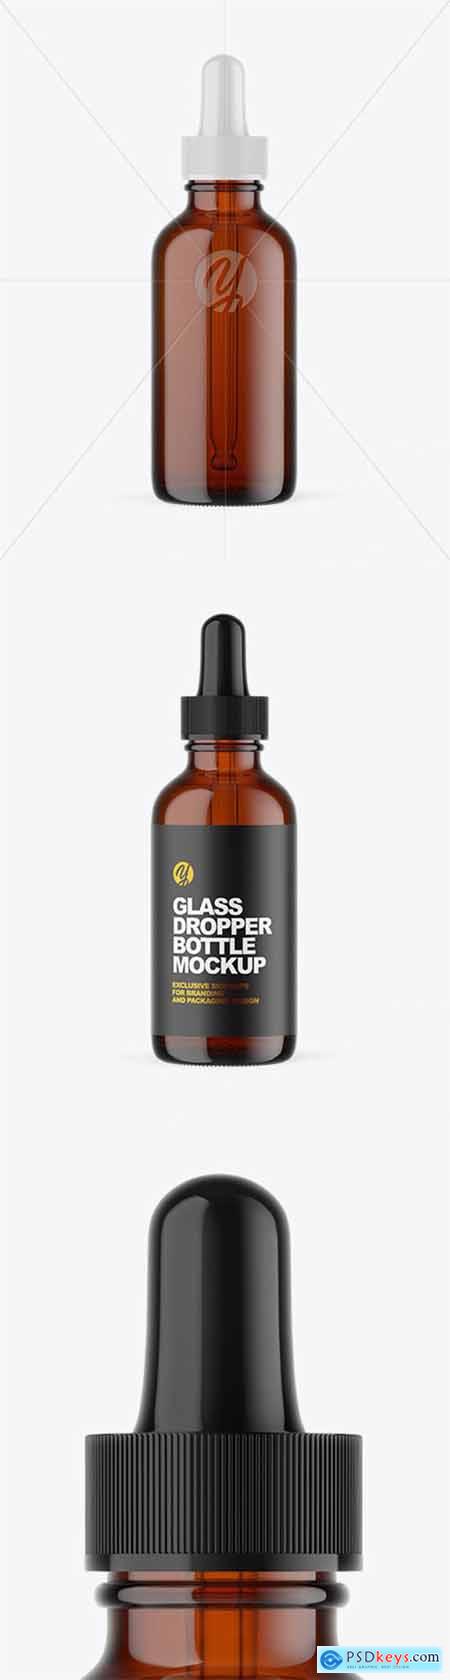 Download Amber Glass Dropper Bottle Mockup 65179 Free Download Photoshop Vector Stock Image Via Torrent Zippyshare From Psdkeys Com